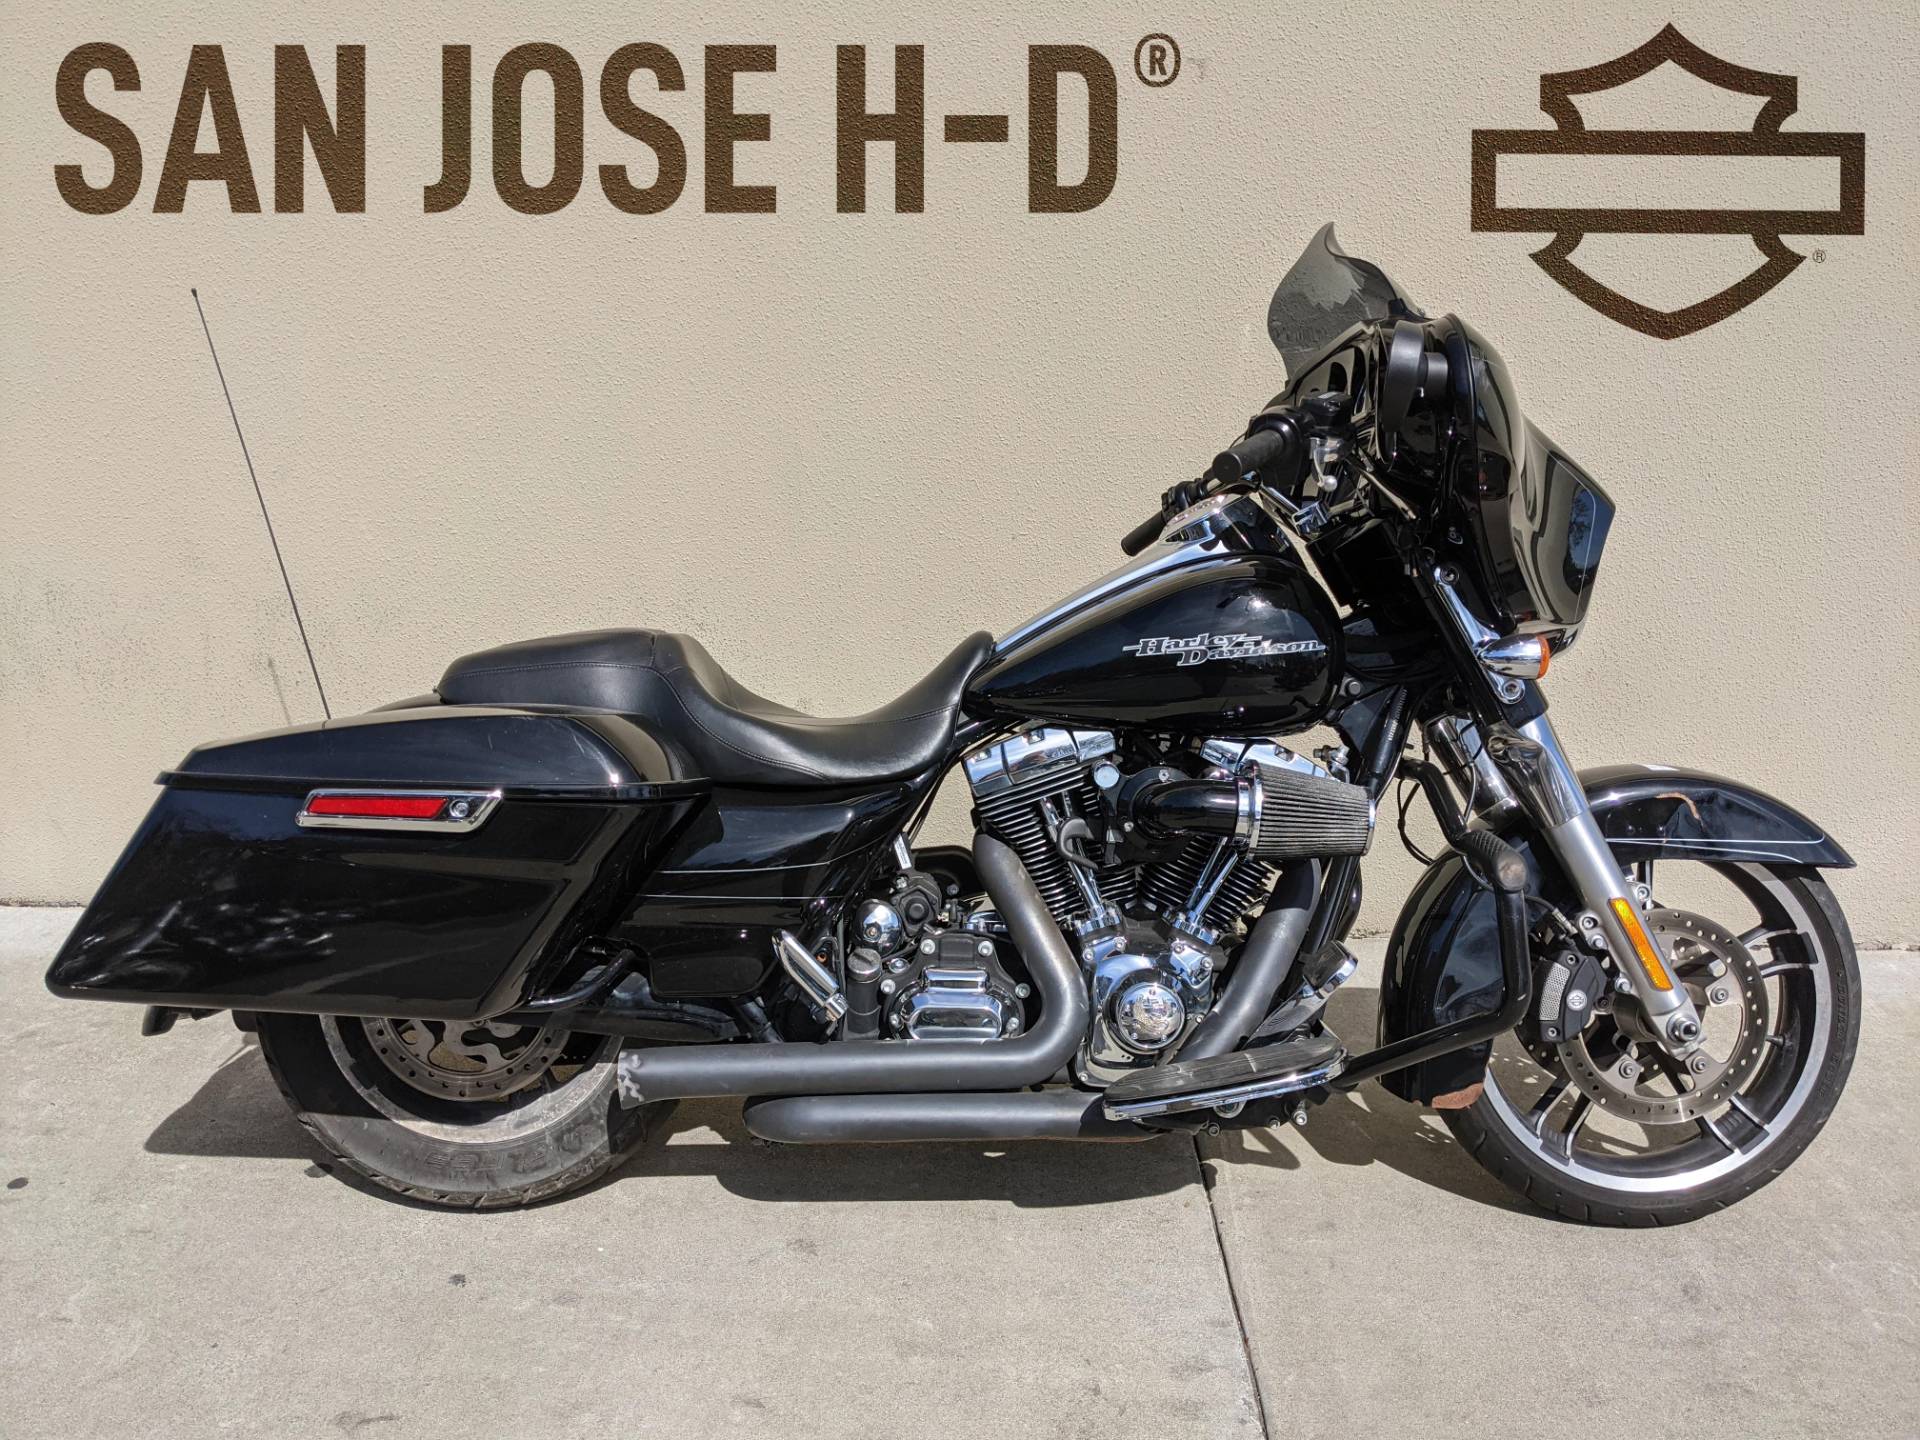 2015 Harley-Davidson Street Glide® Special in San Jose, California - Photo 1